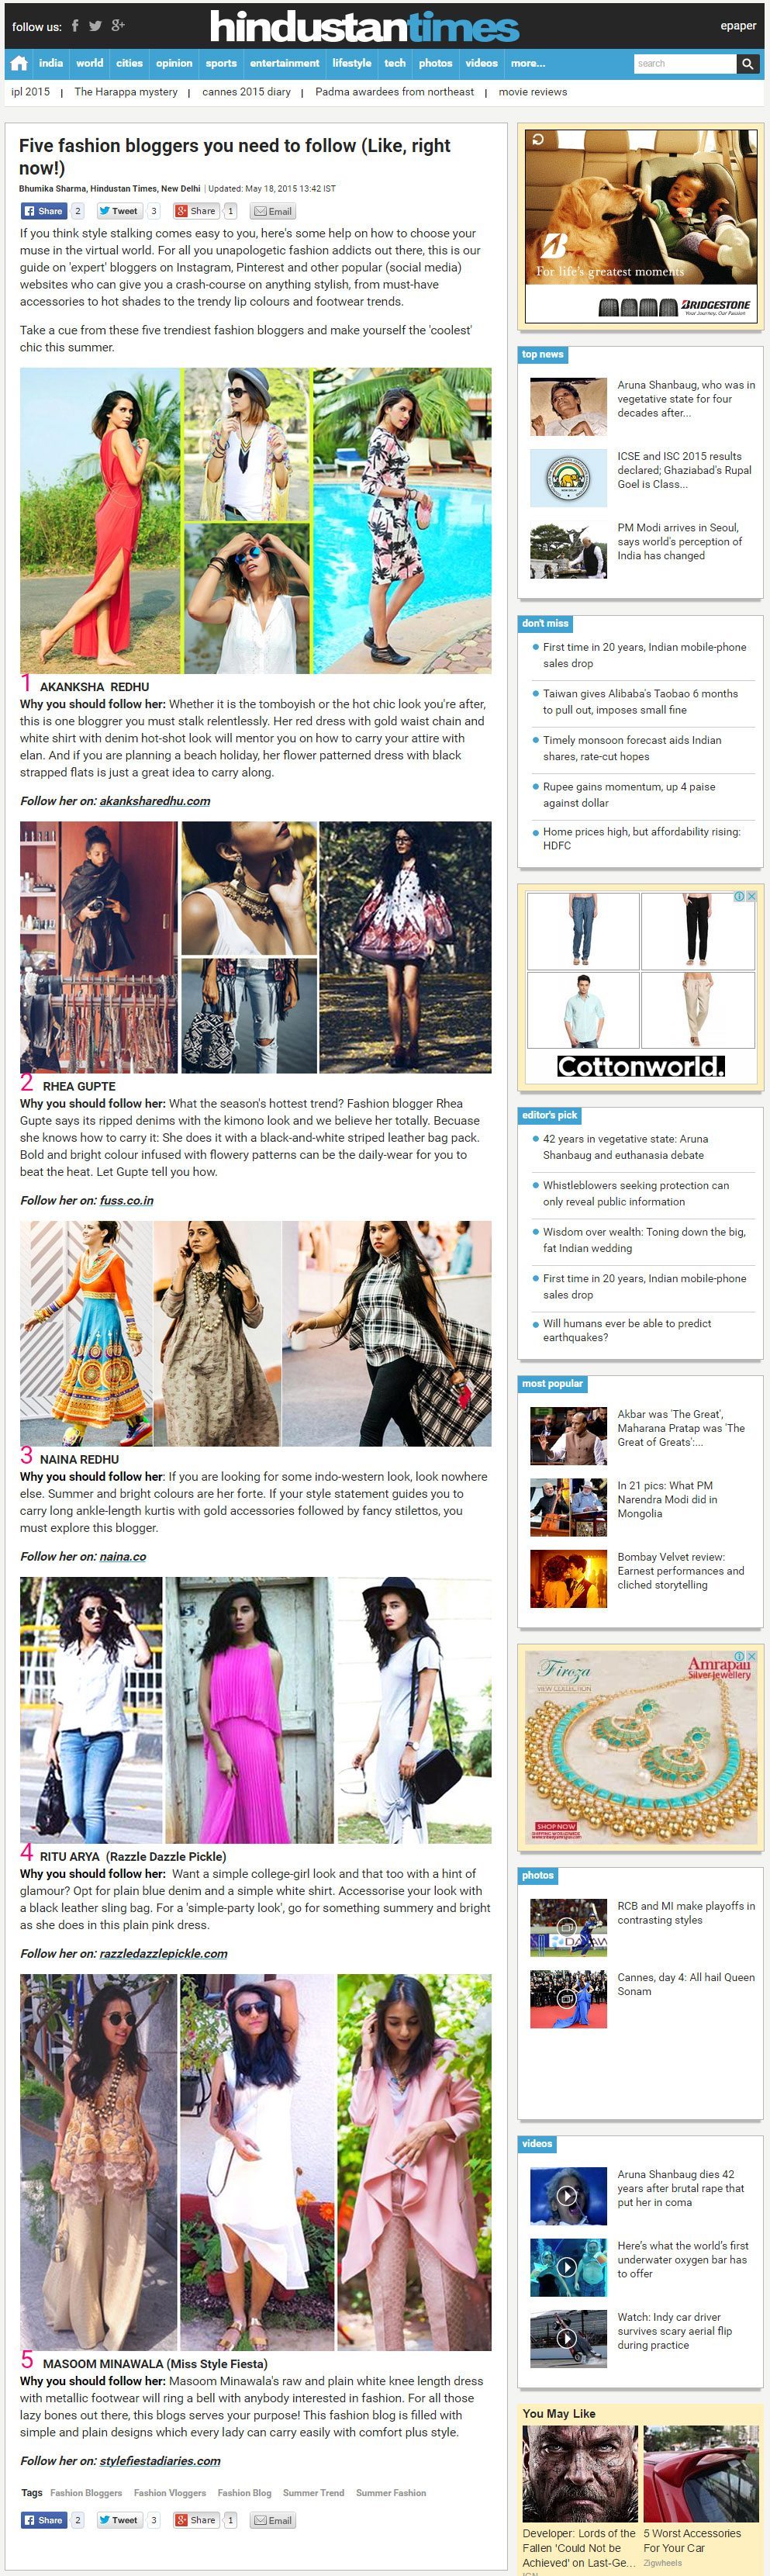 Hindustan Times, Five Fashion Bloggers To Follow, Press, Naina.co Luxury & Lifestyle, Photographer Storyteller, Blogger. 